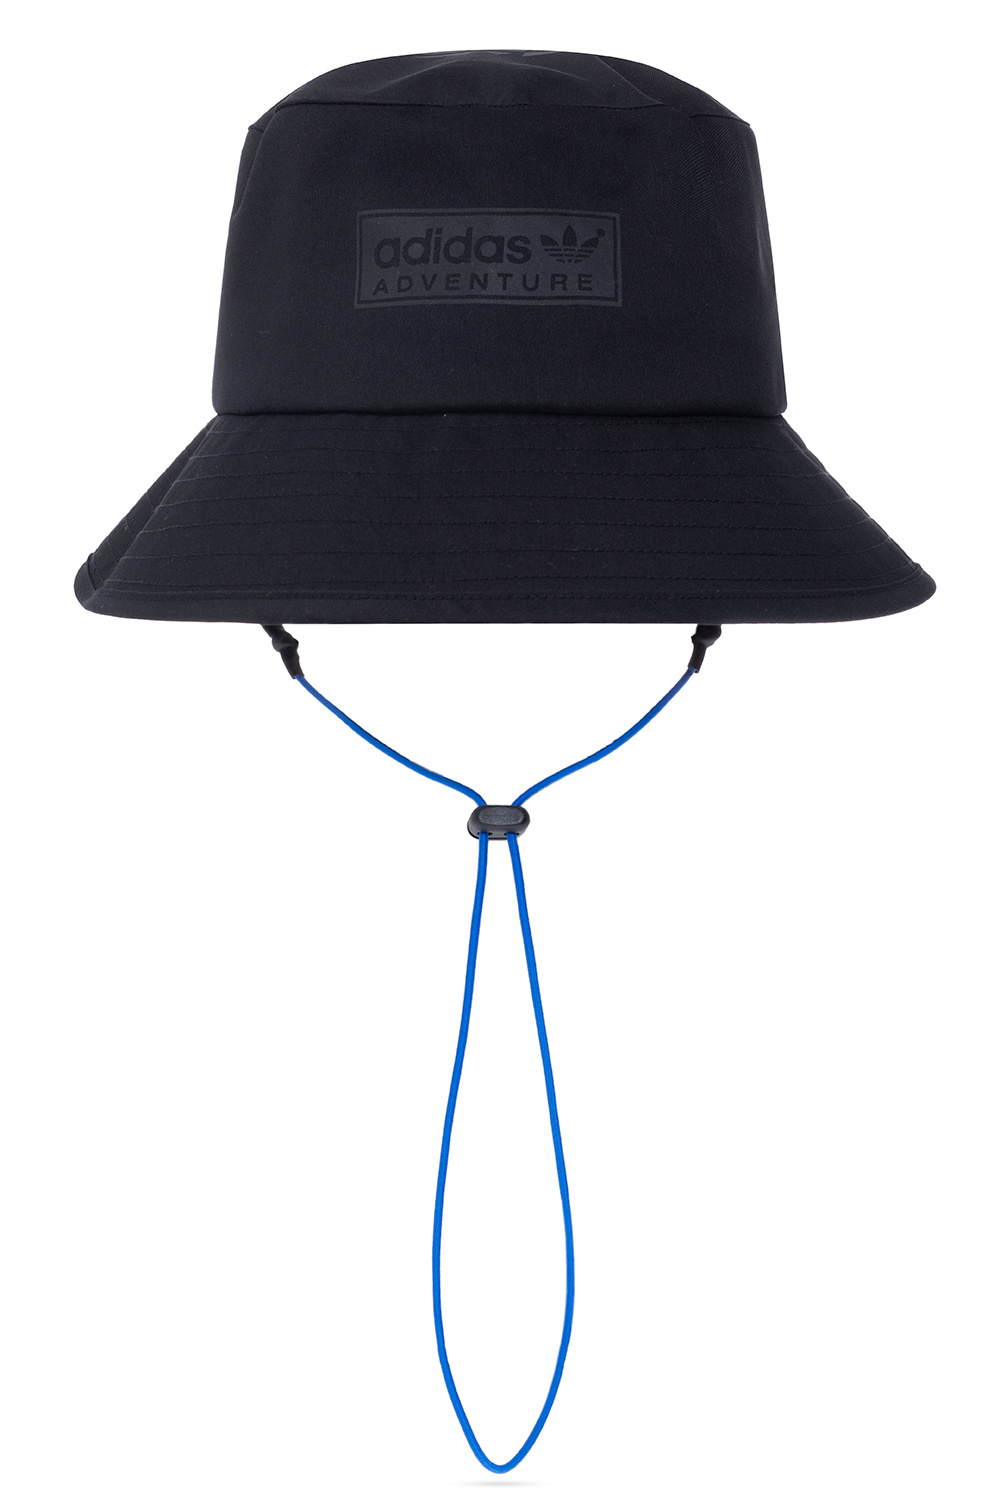 adidas vegas Originals Bucket hat with logo